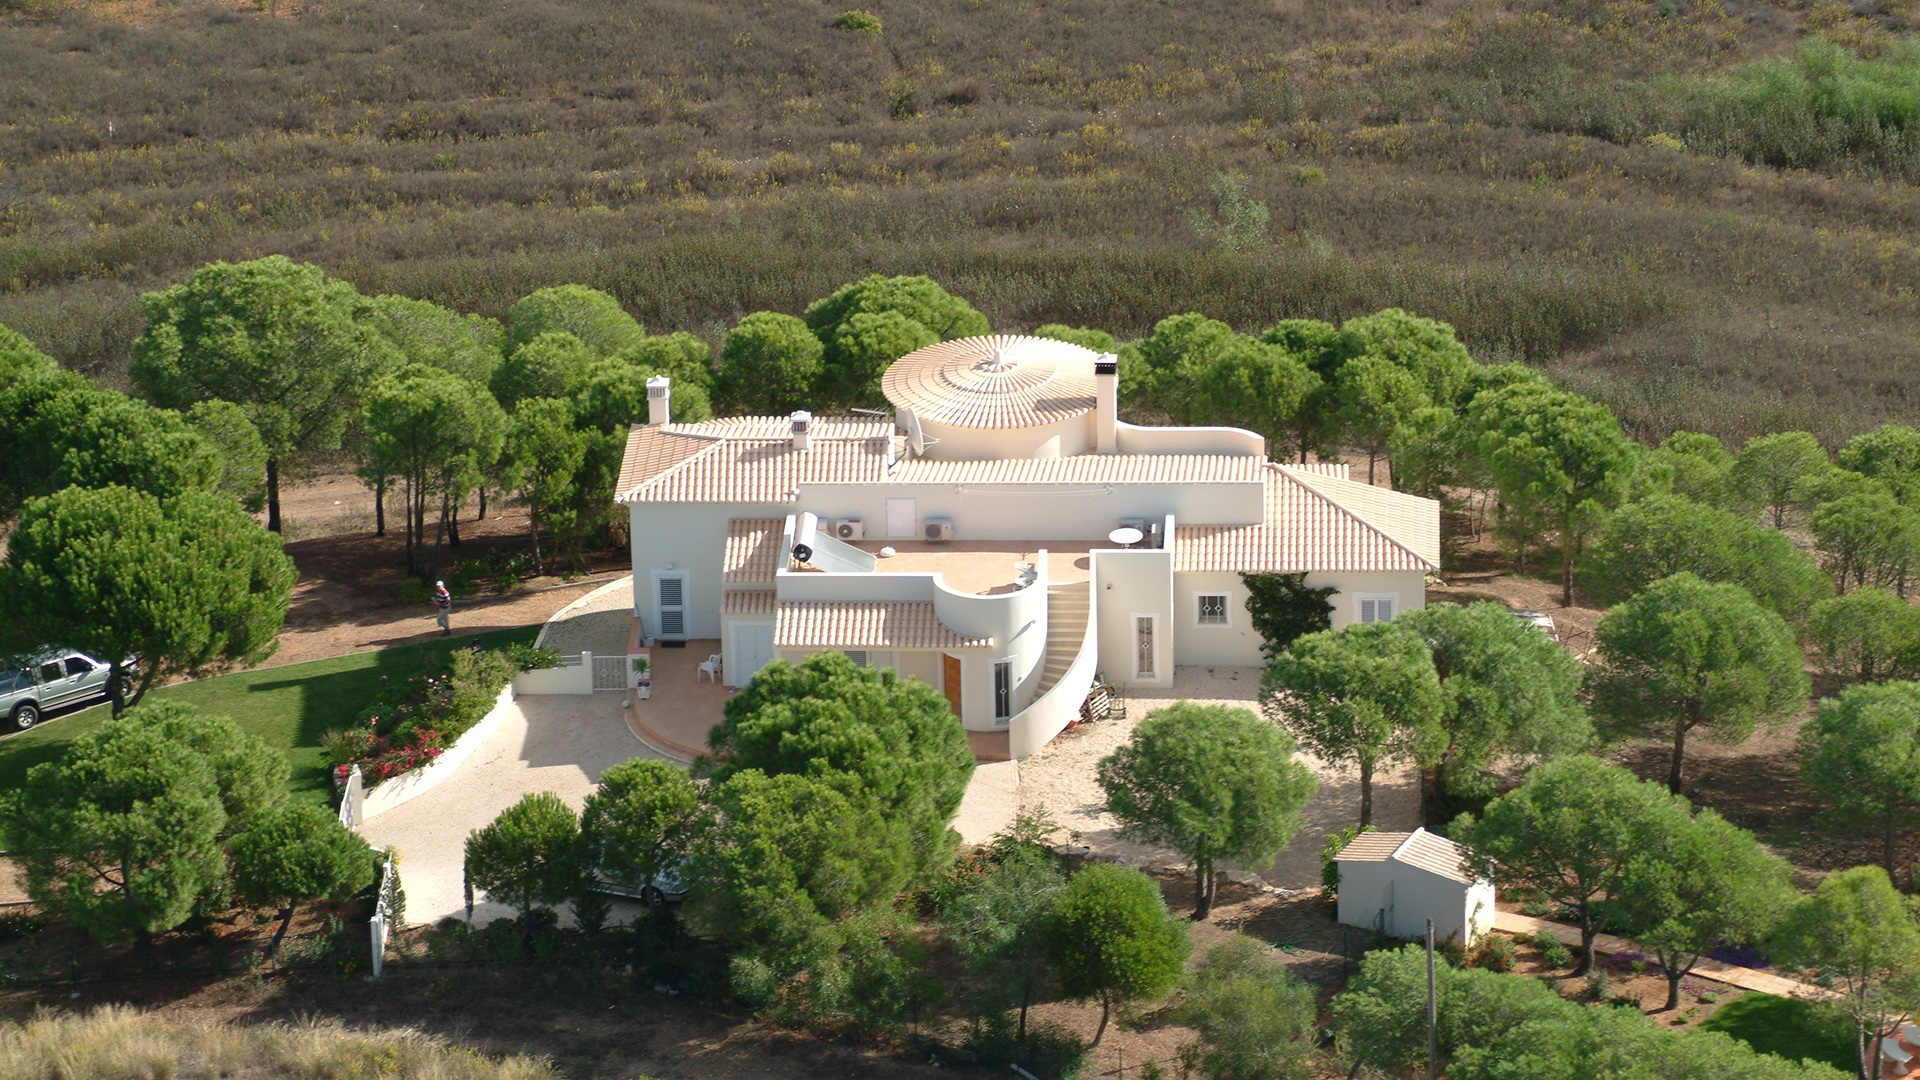 5 SZ Villa mit Pool auf 9,3 ha großem Grundstück, Senhora do Verde - West Algarve | LG1417 